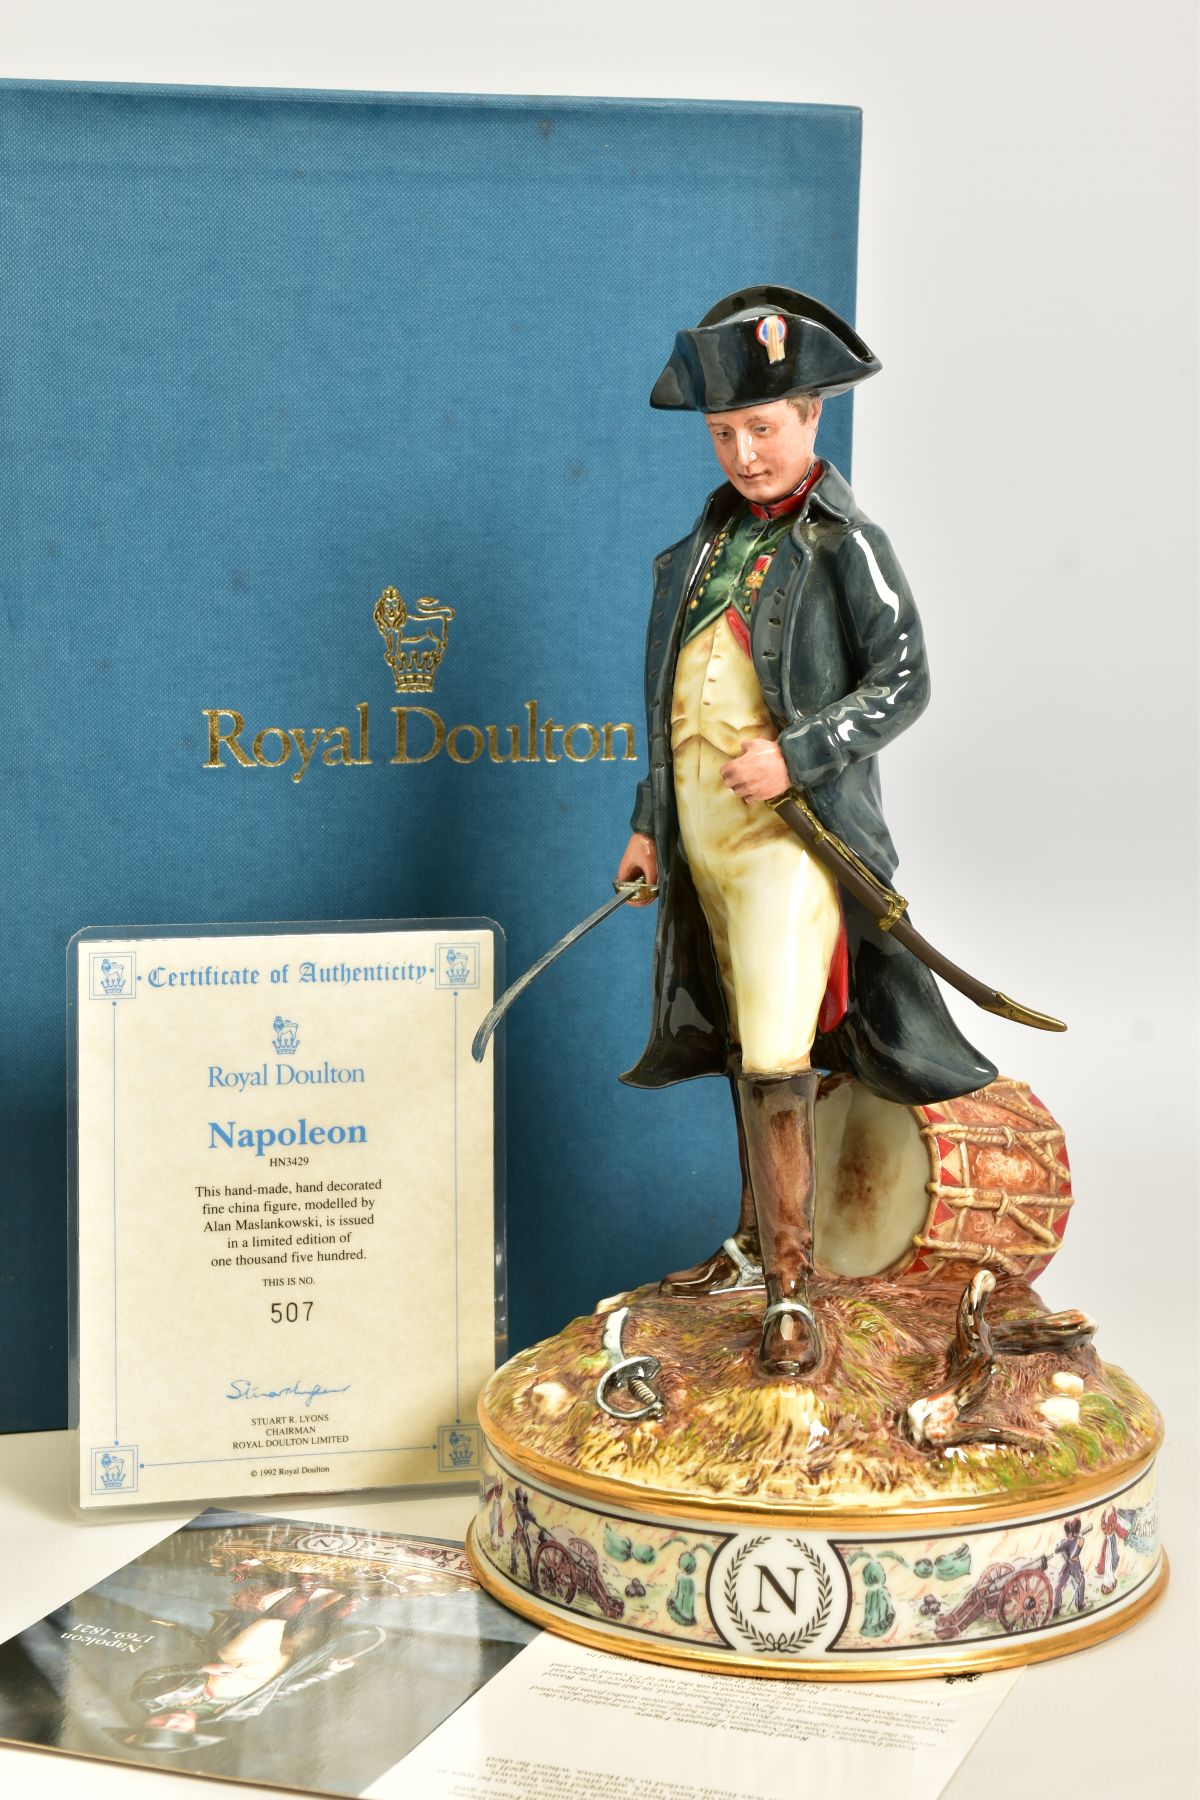 A ROYAL DOULTON LIMITED EDITION FIGURE, 'Napoleon' HN3429, modelled by Alan Maslankowski, No 507/